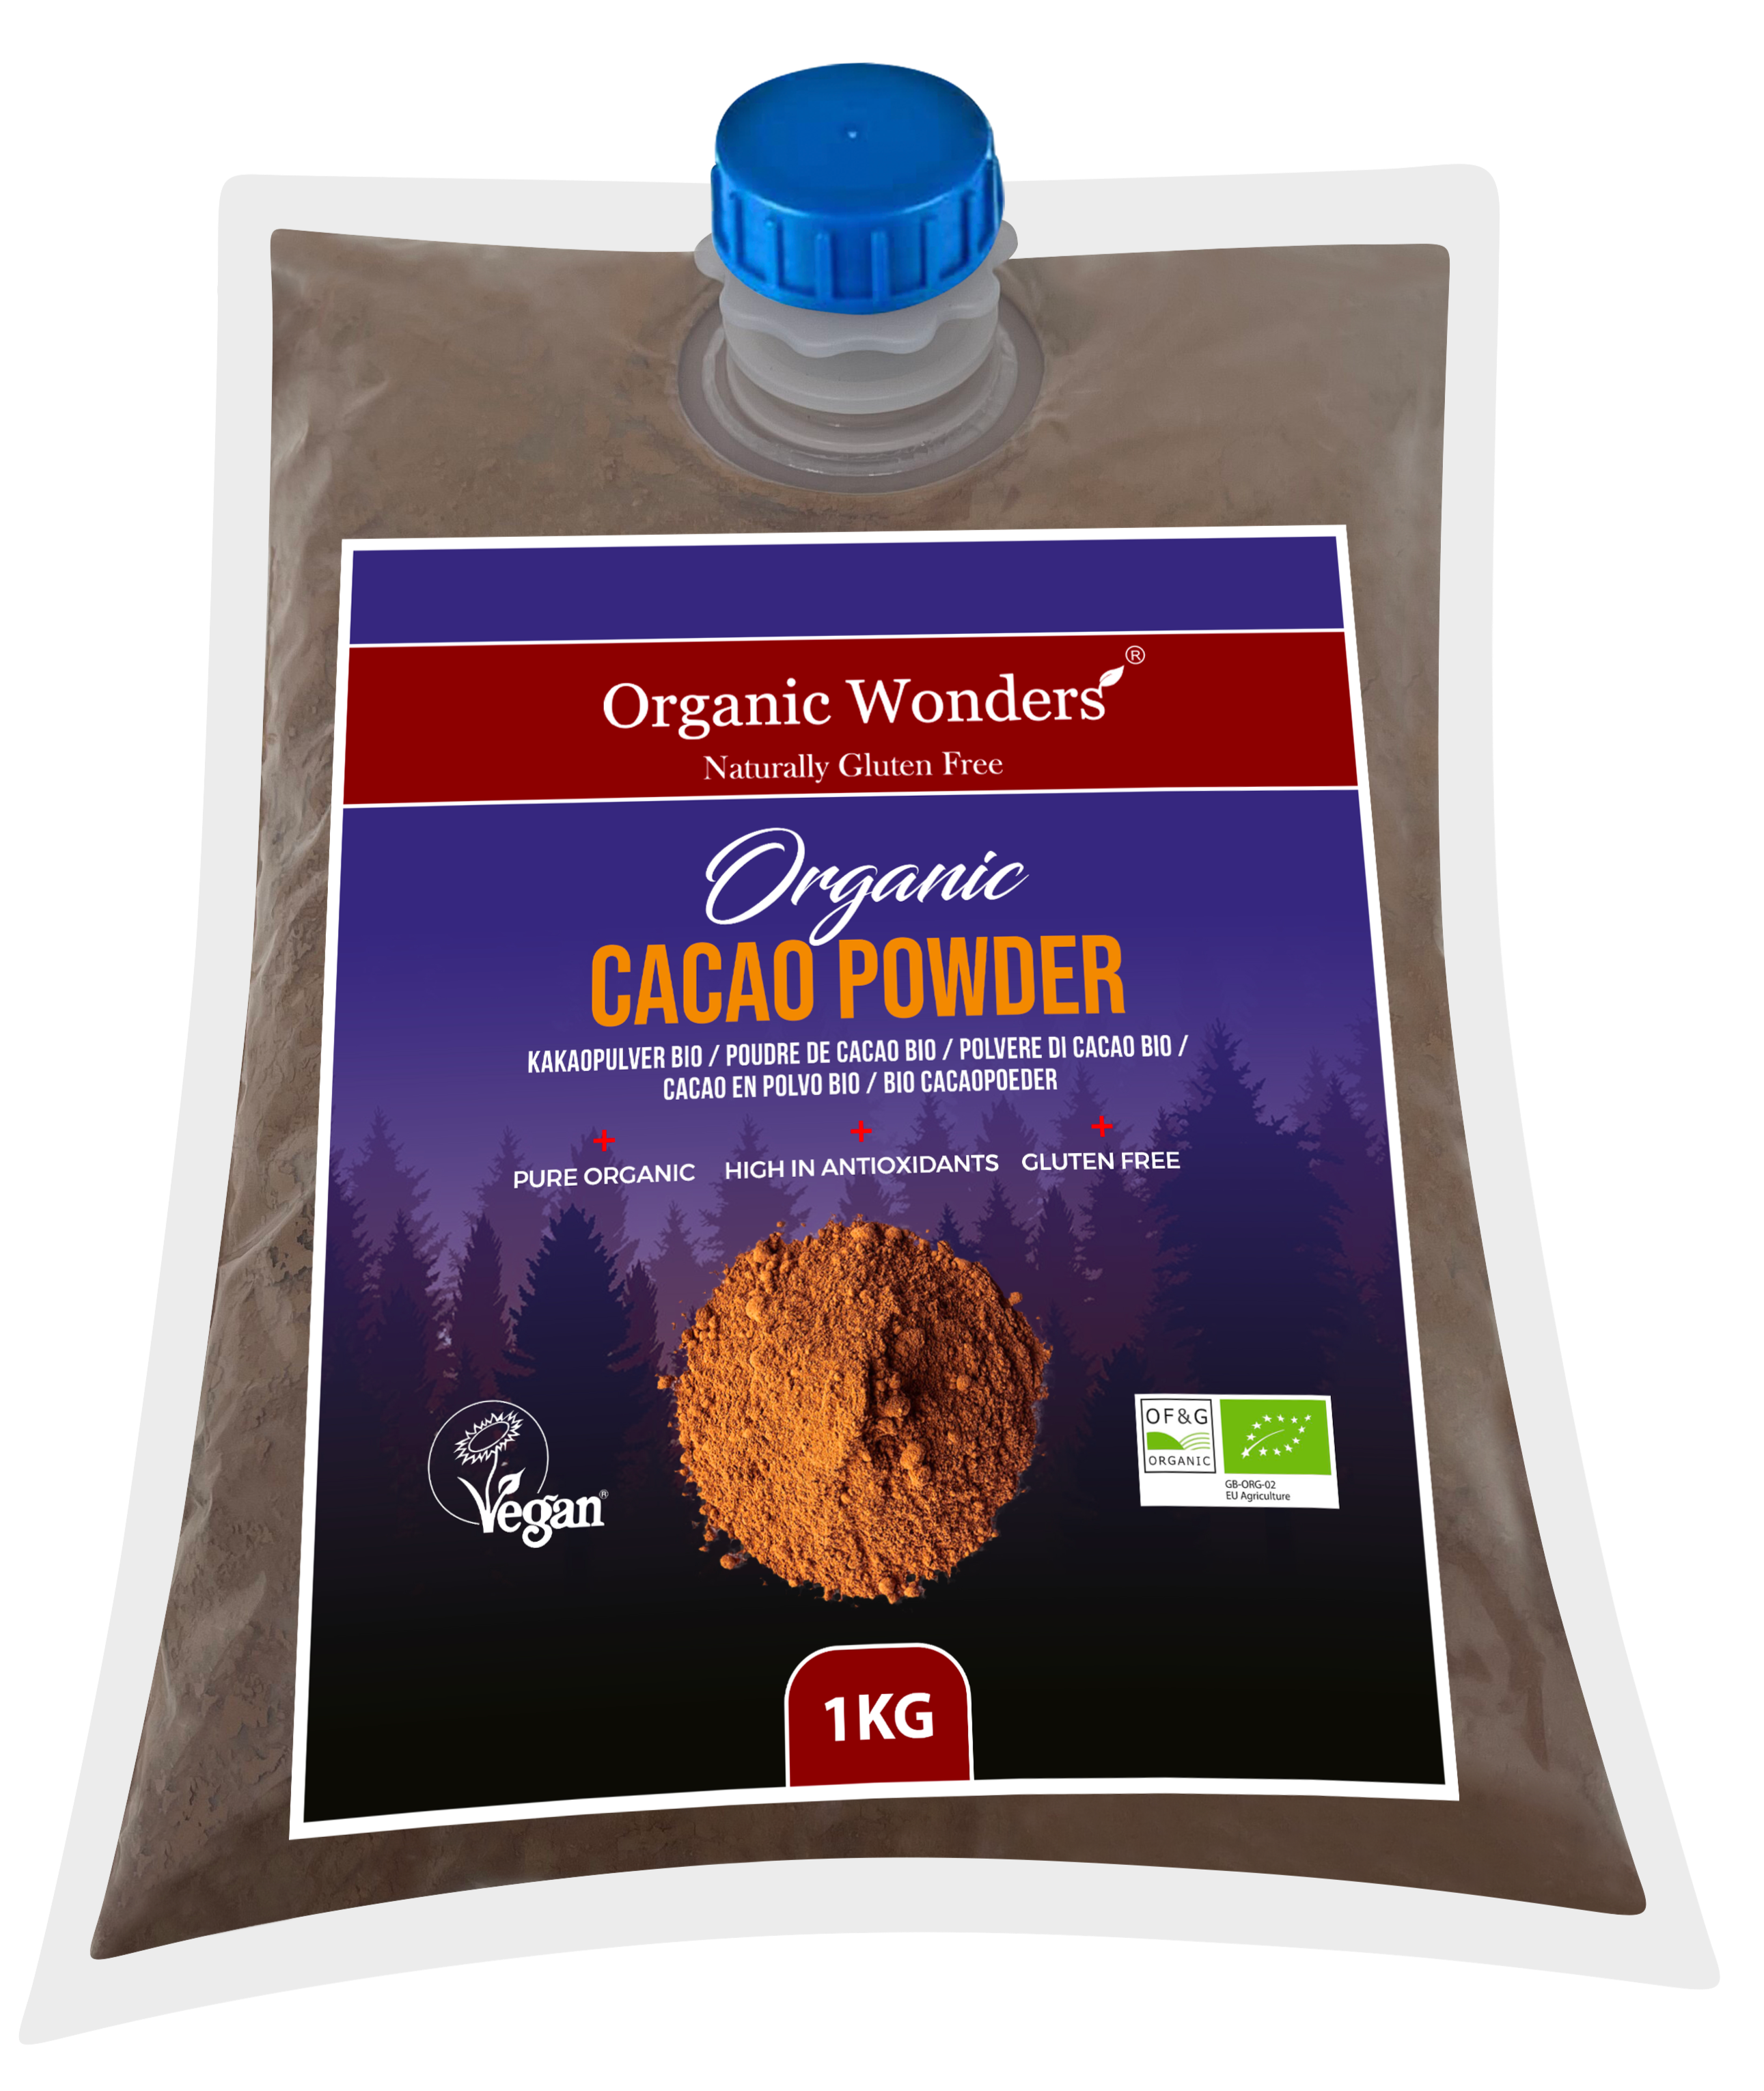 Organic Cacao Powder 1kg | Organic Wonders UK